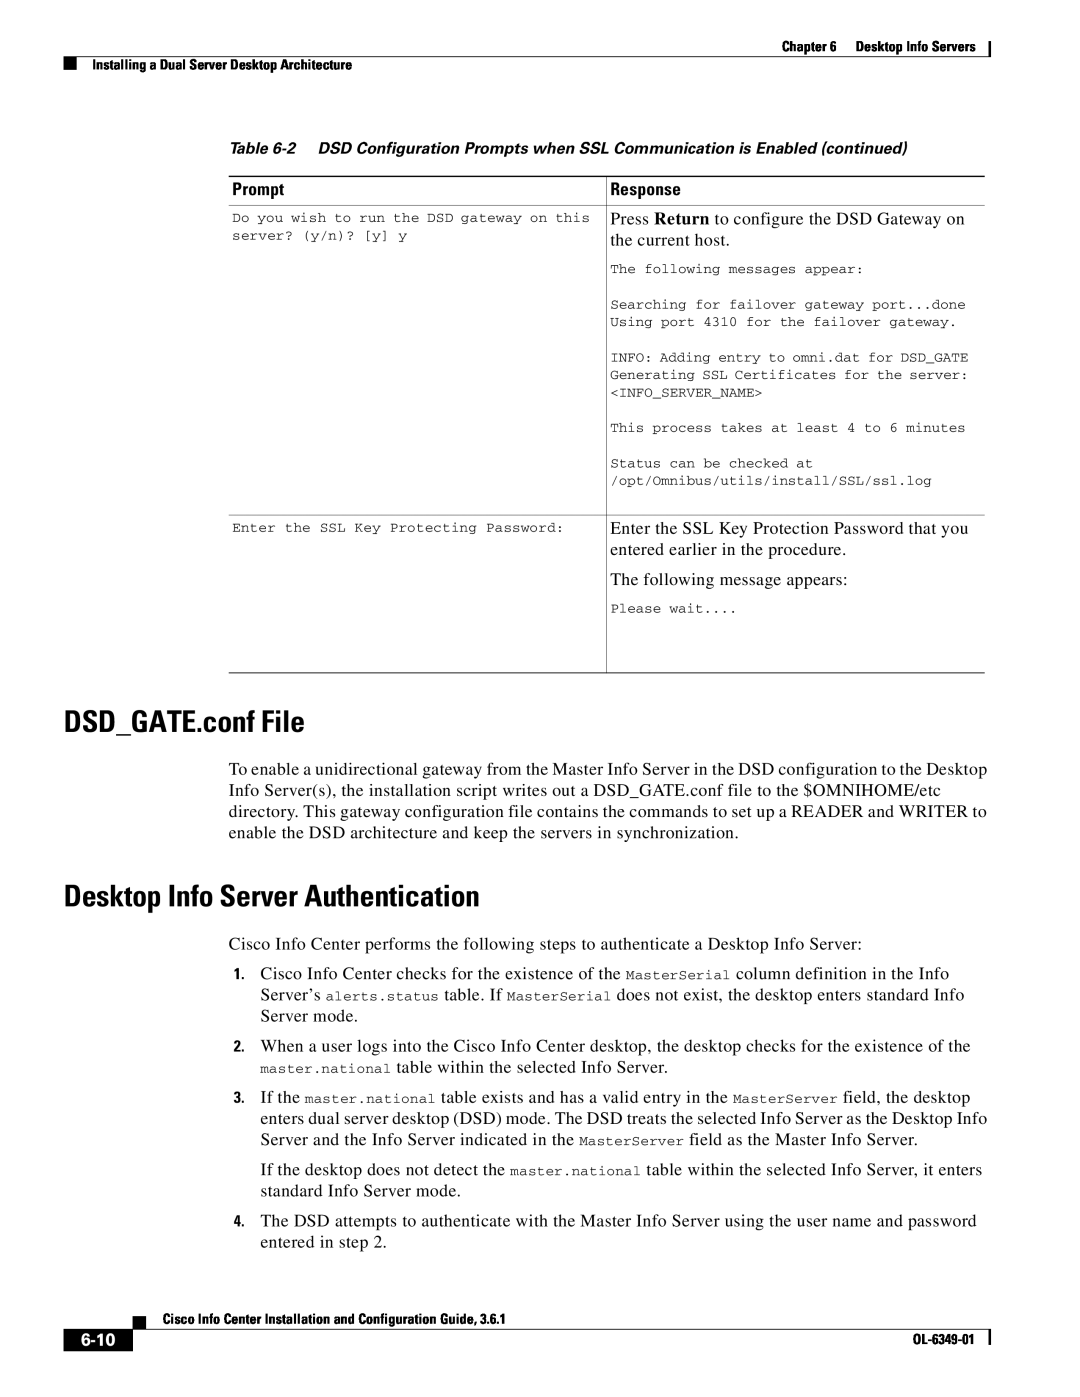 Cisco Systems OL-6349-01 manual DSDGATE.conf File, Desktop Info Server Authentication, 6-10, Prompt, Response 